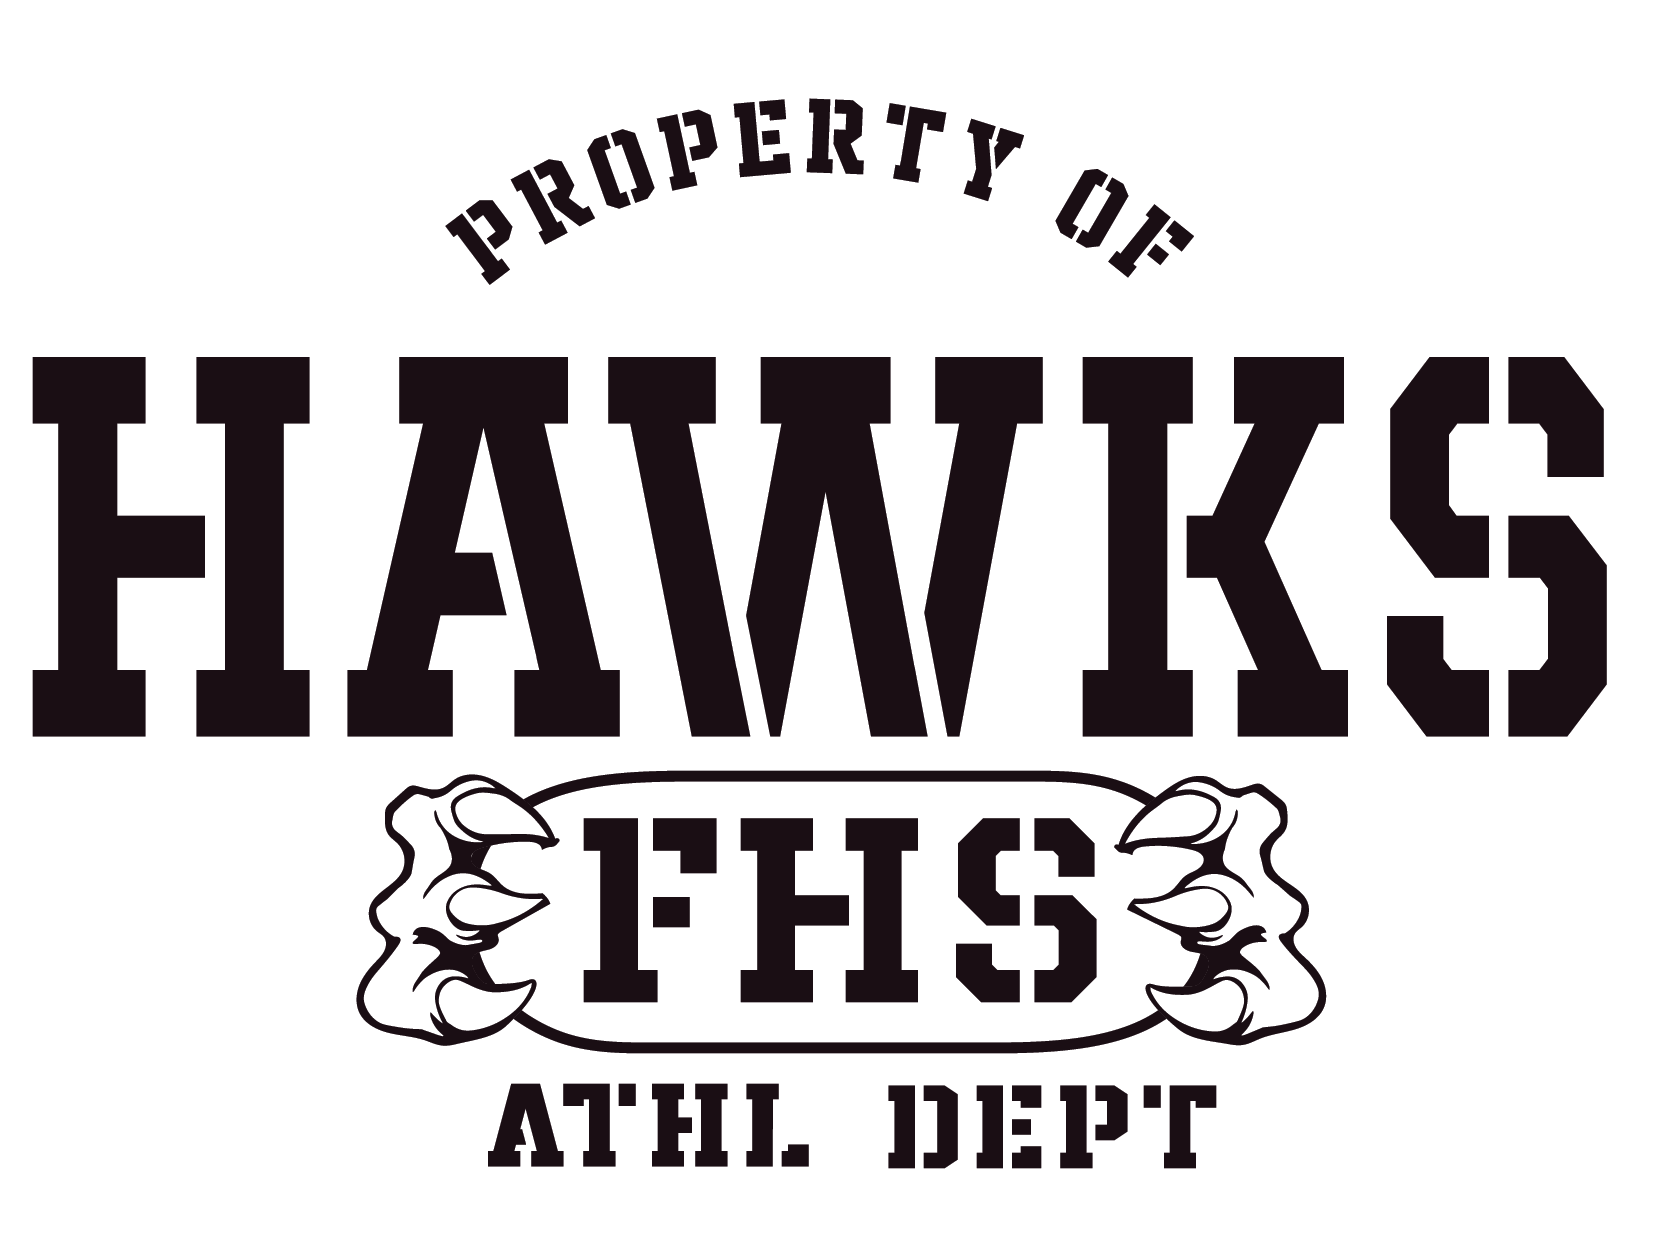 Property Of FHS Hawks White Hoodie